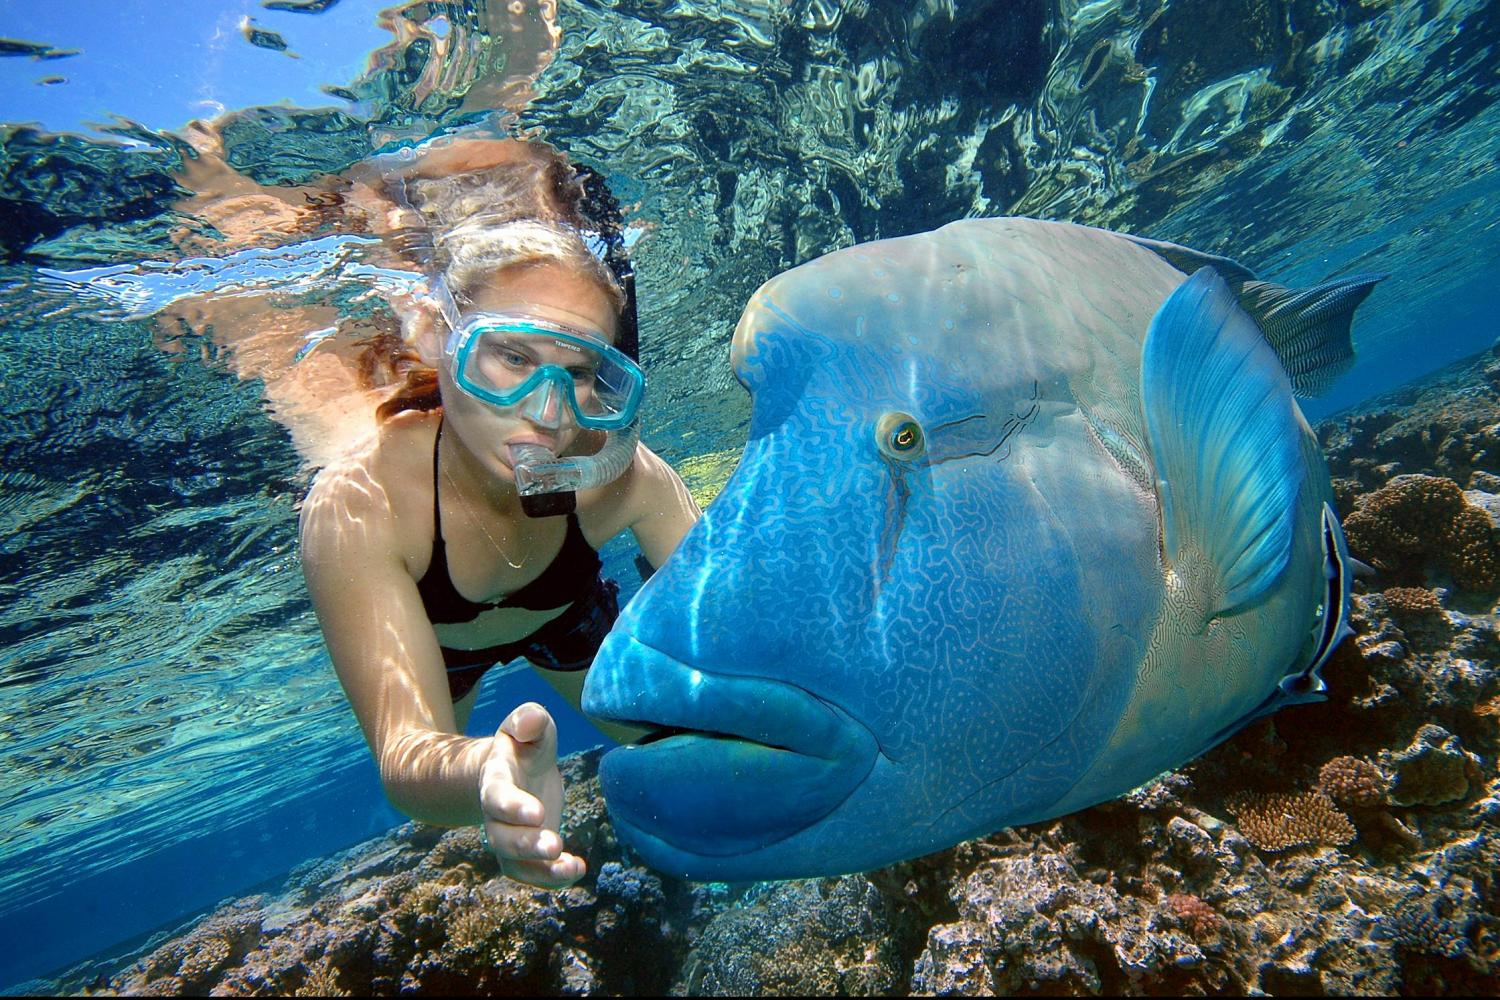 Best Underwater Experiences in the World